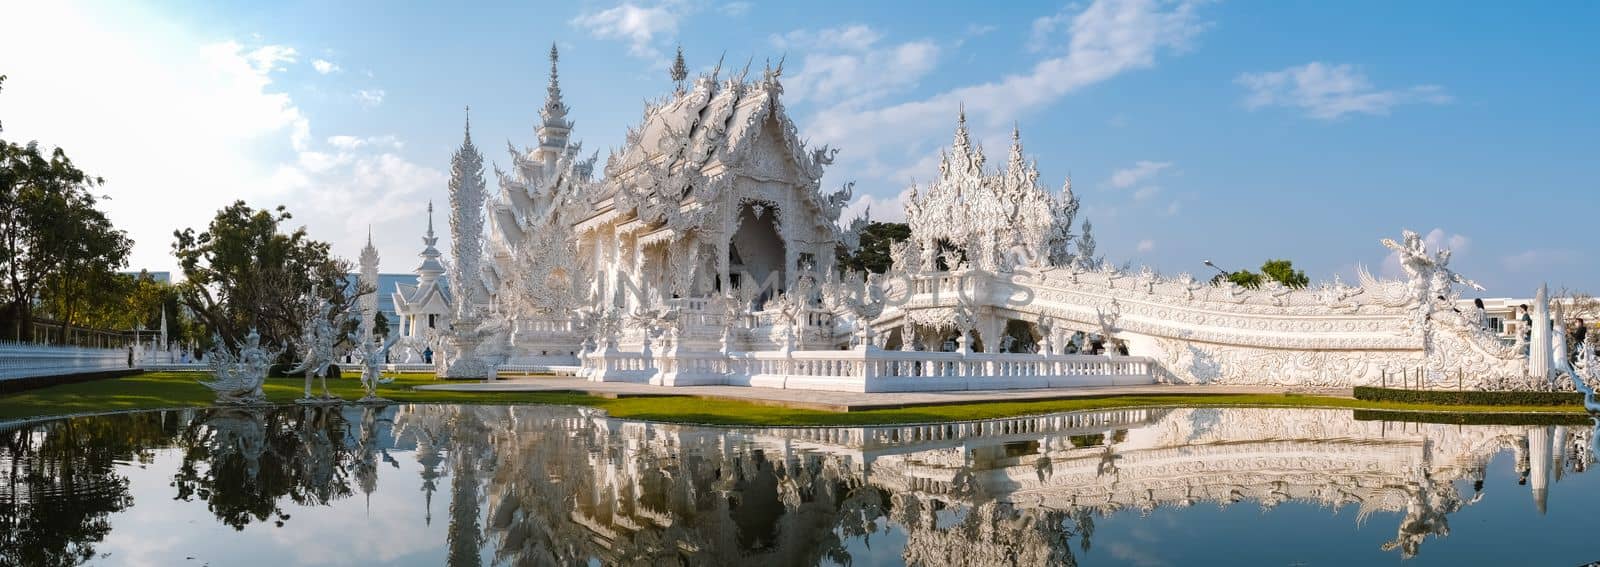 White Temple Chiang Rai Thailand, Wat Rong Khun , Chiang Rai, Northern Thailand.